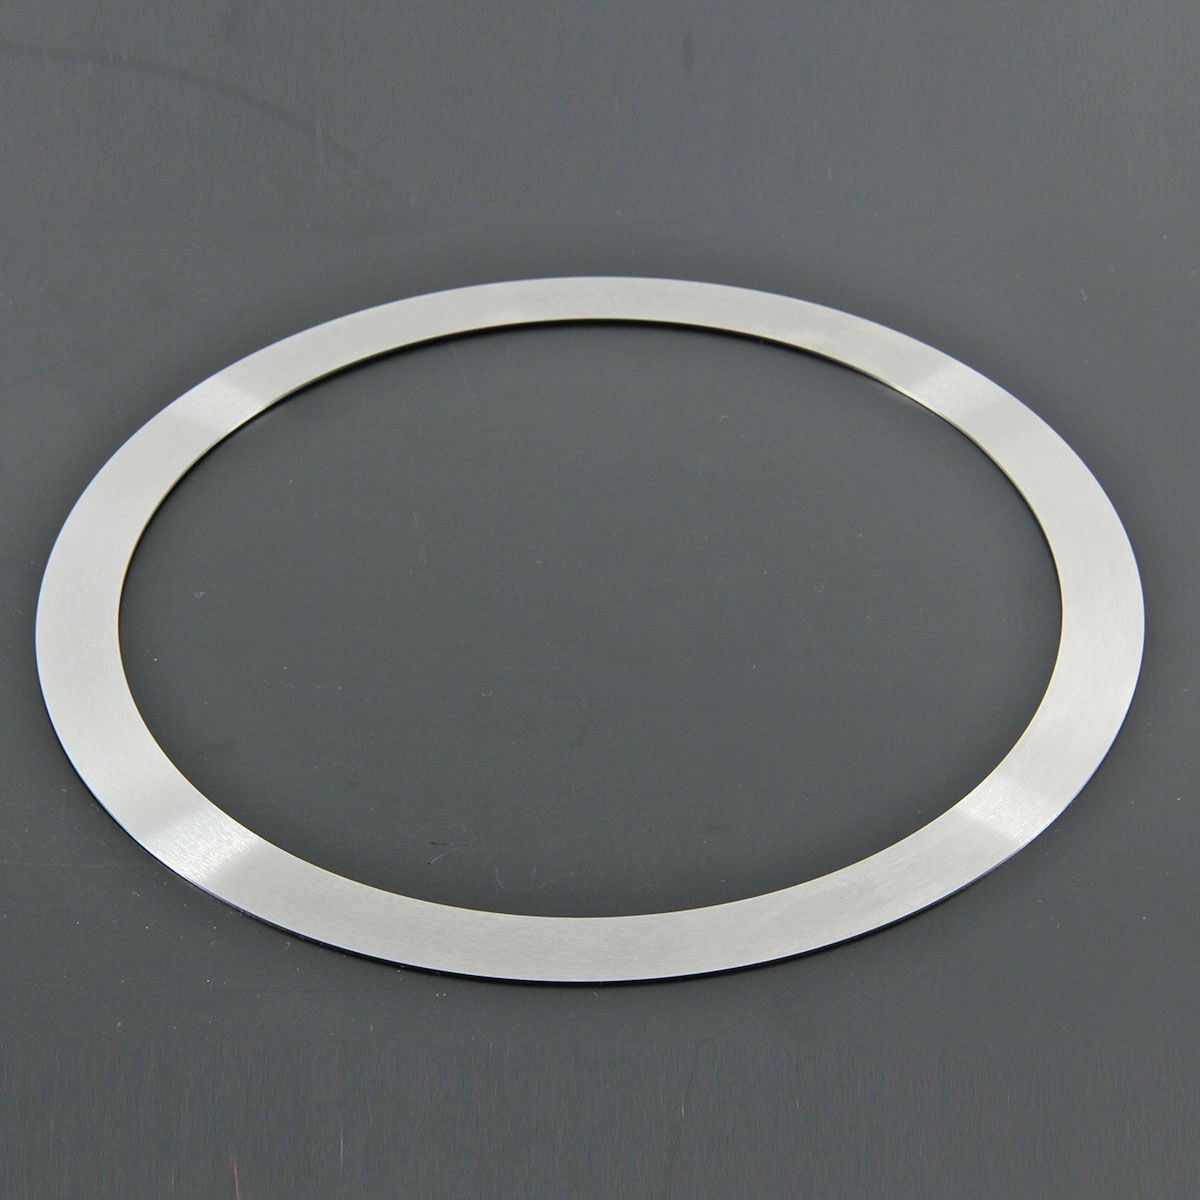 Cuchilla de rebobinado de disco cortador de hoja de bobina de precisión superior del fabricante con espaciador separador